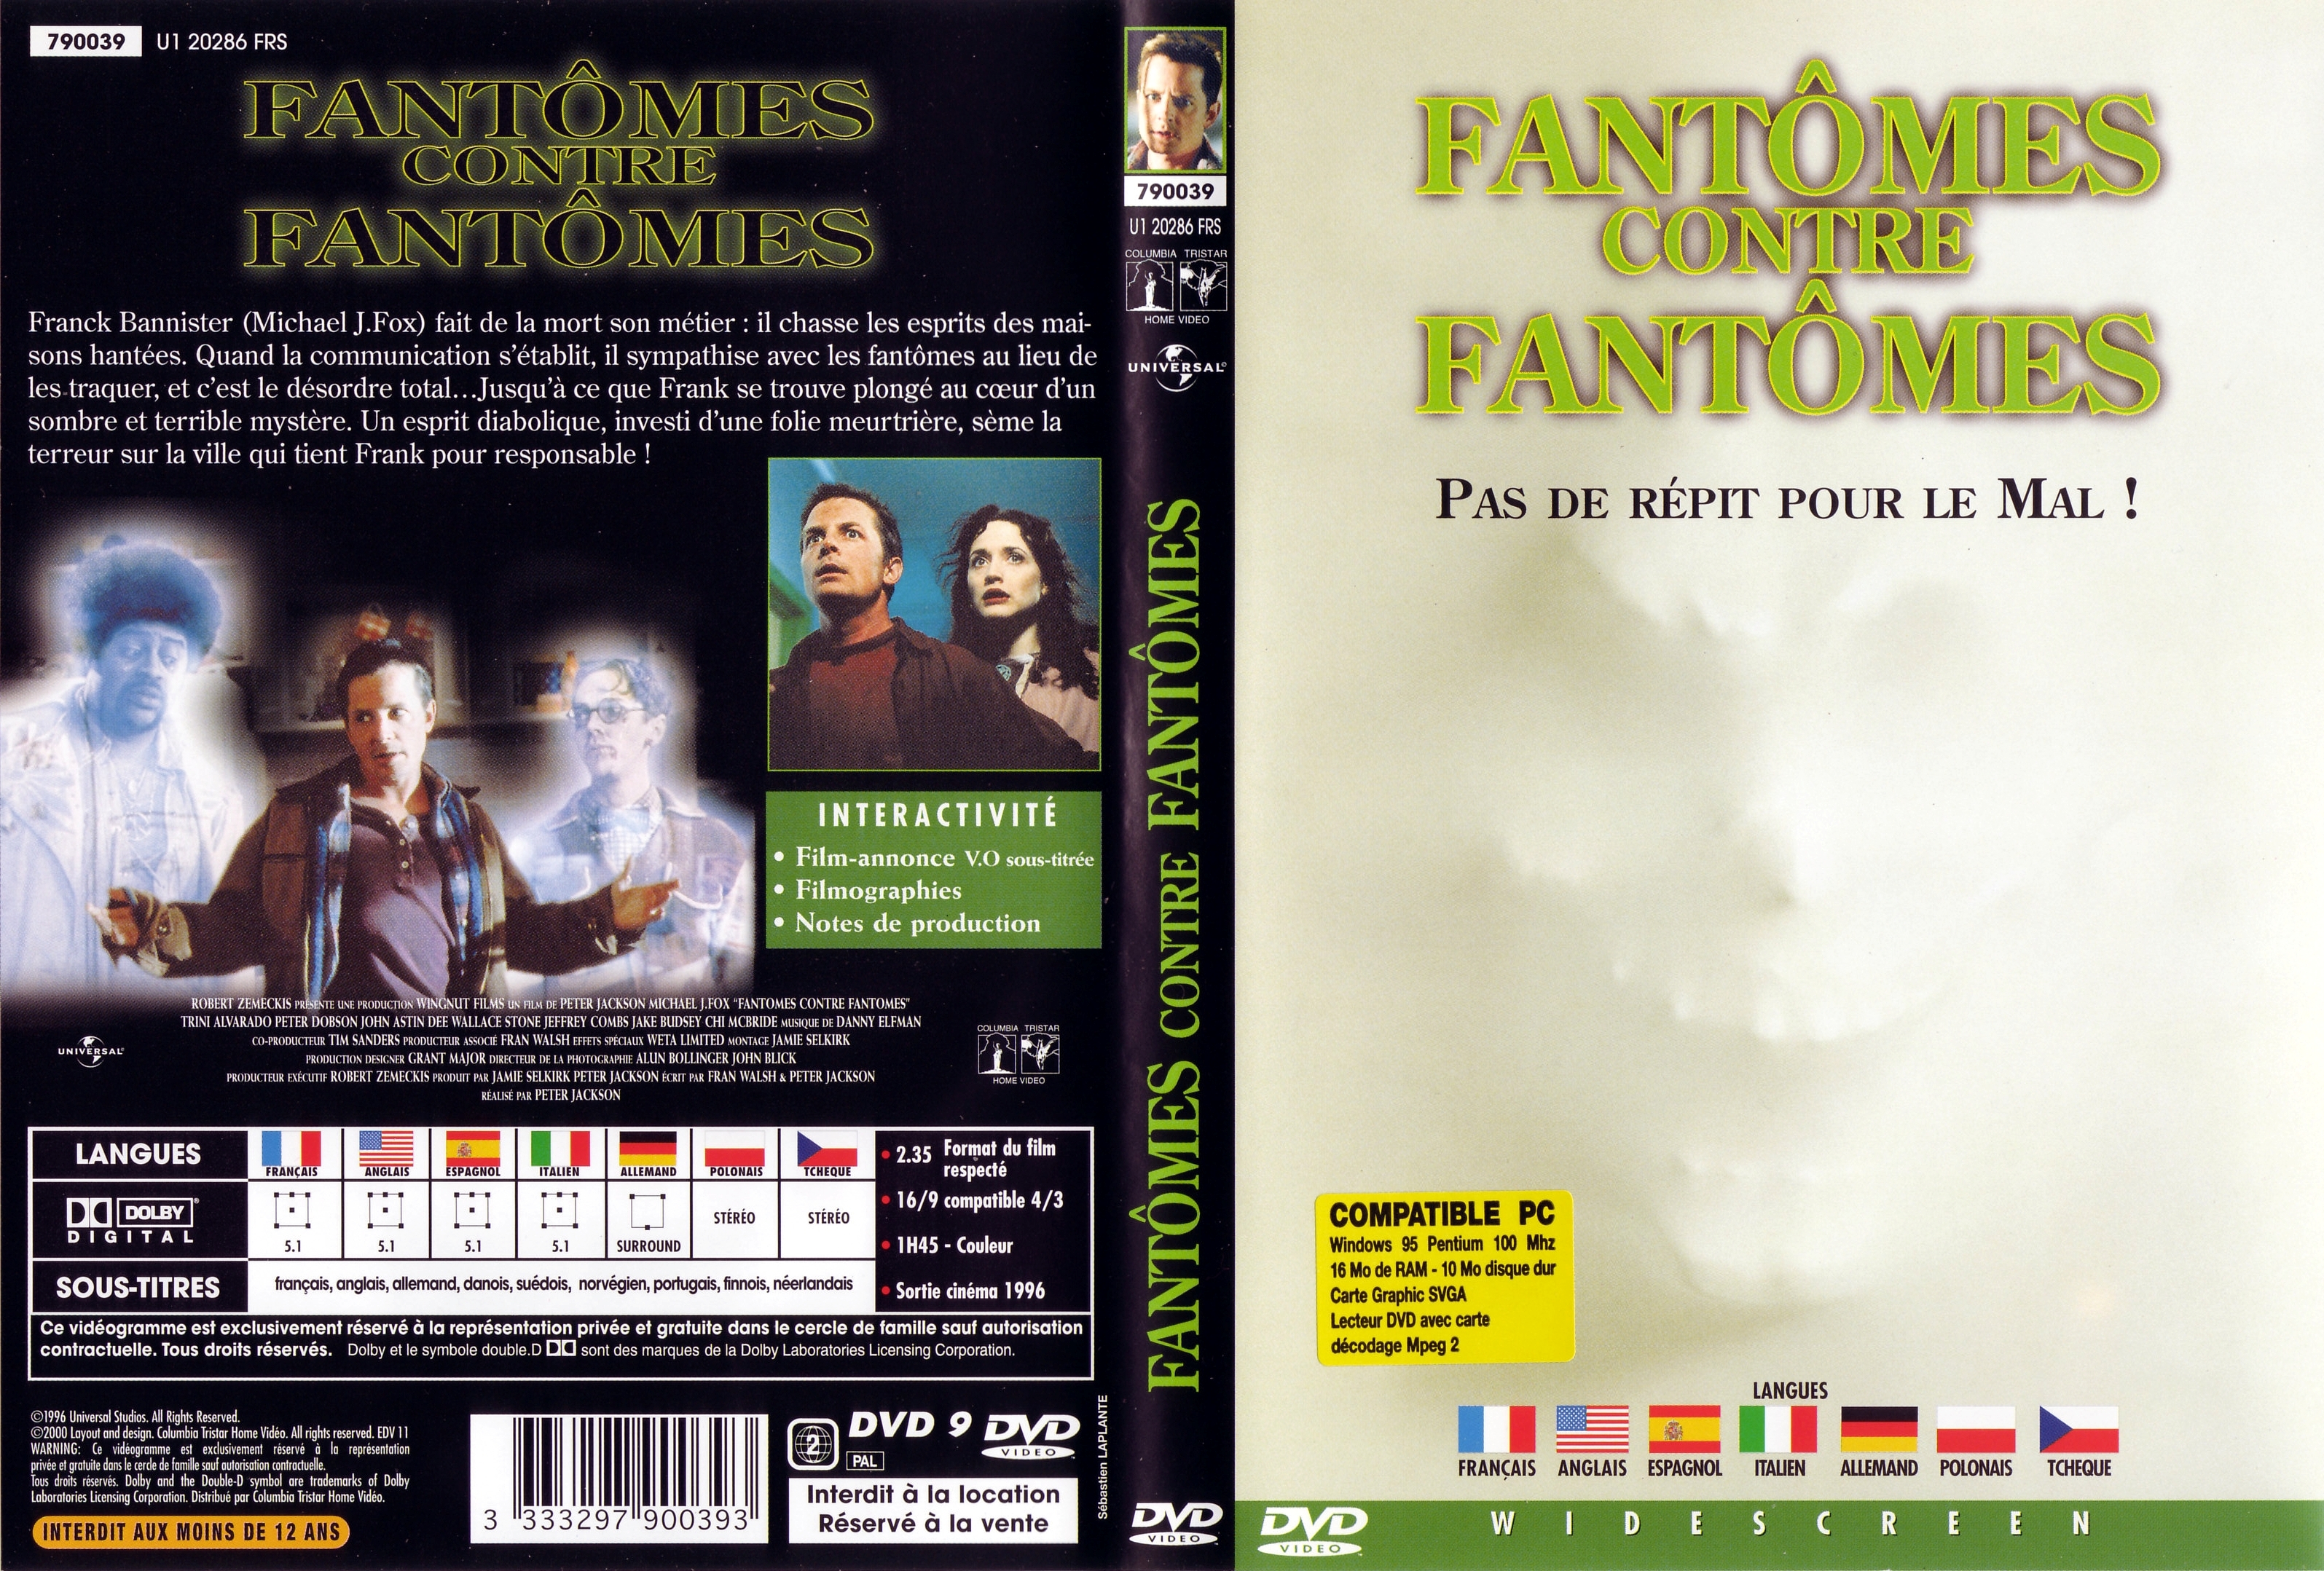 Jaquette DVD Fantomes contre fantomes v4